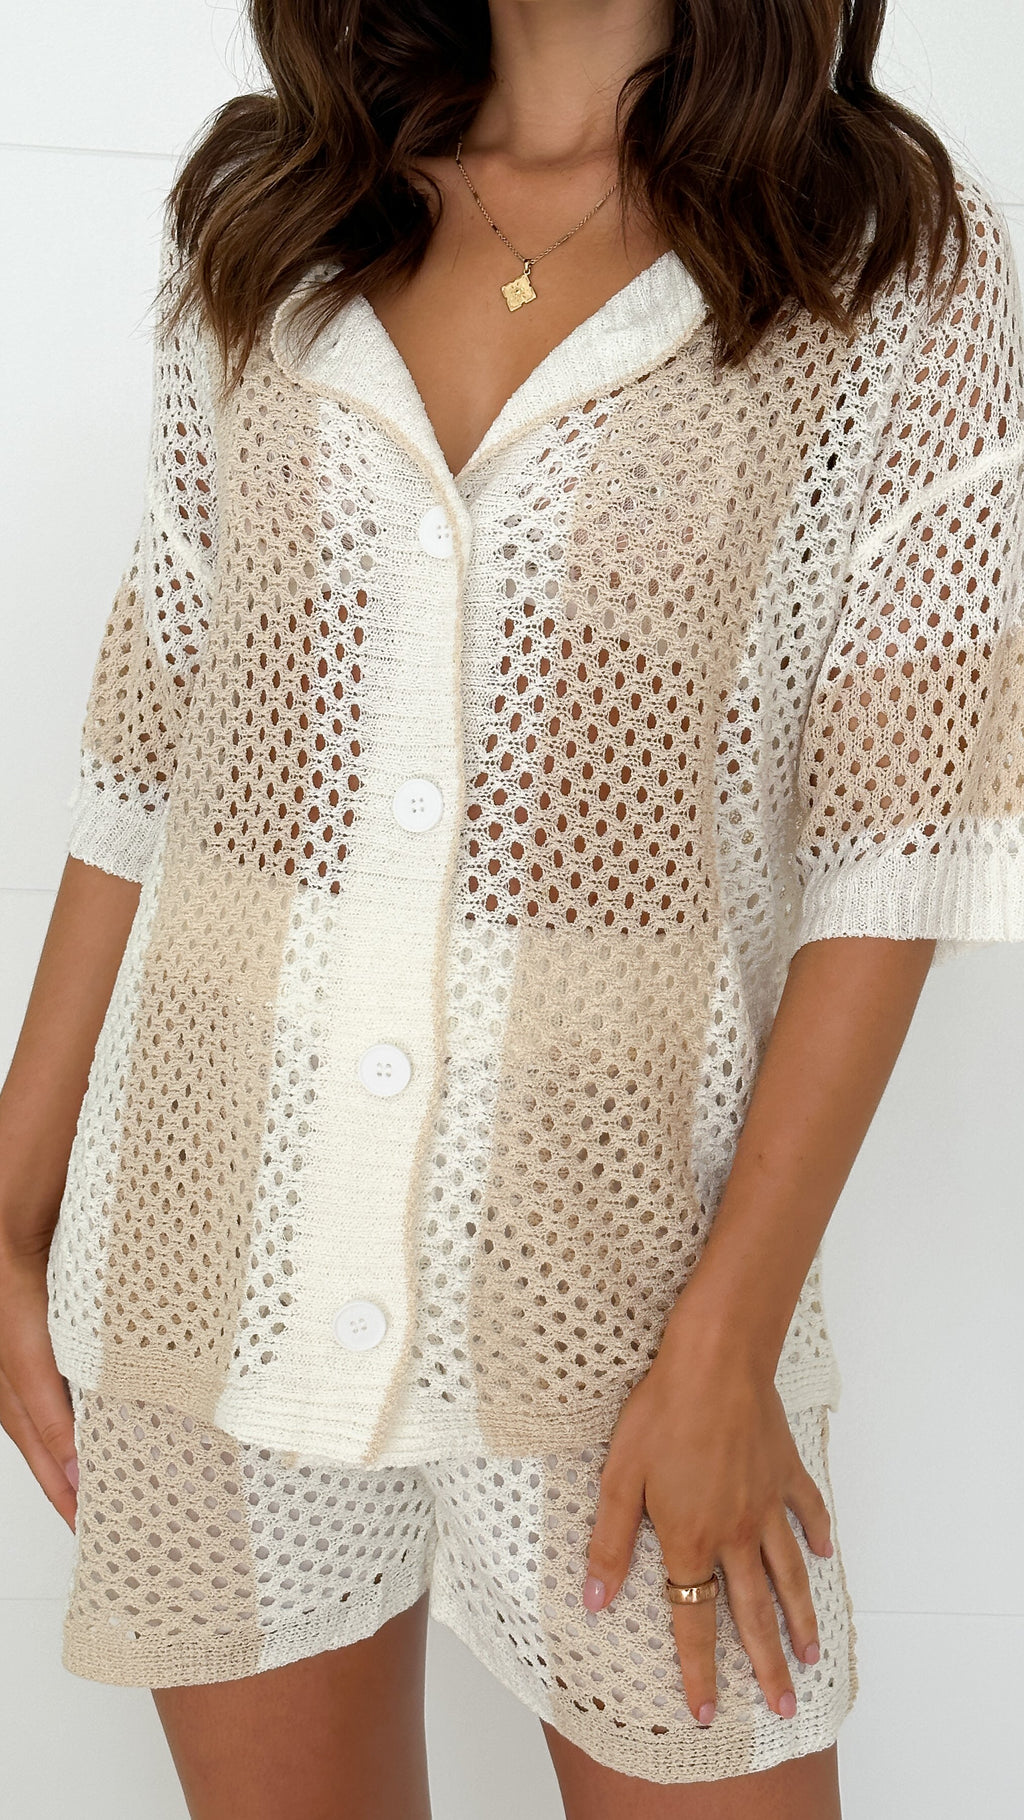 Kadri Knit Button Up Shirt and Shorts Set - Beige / White